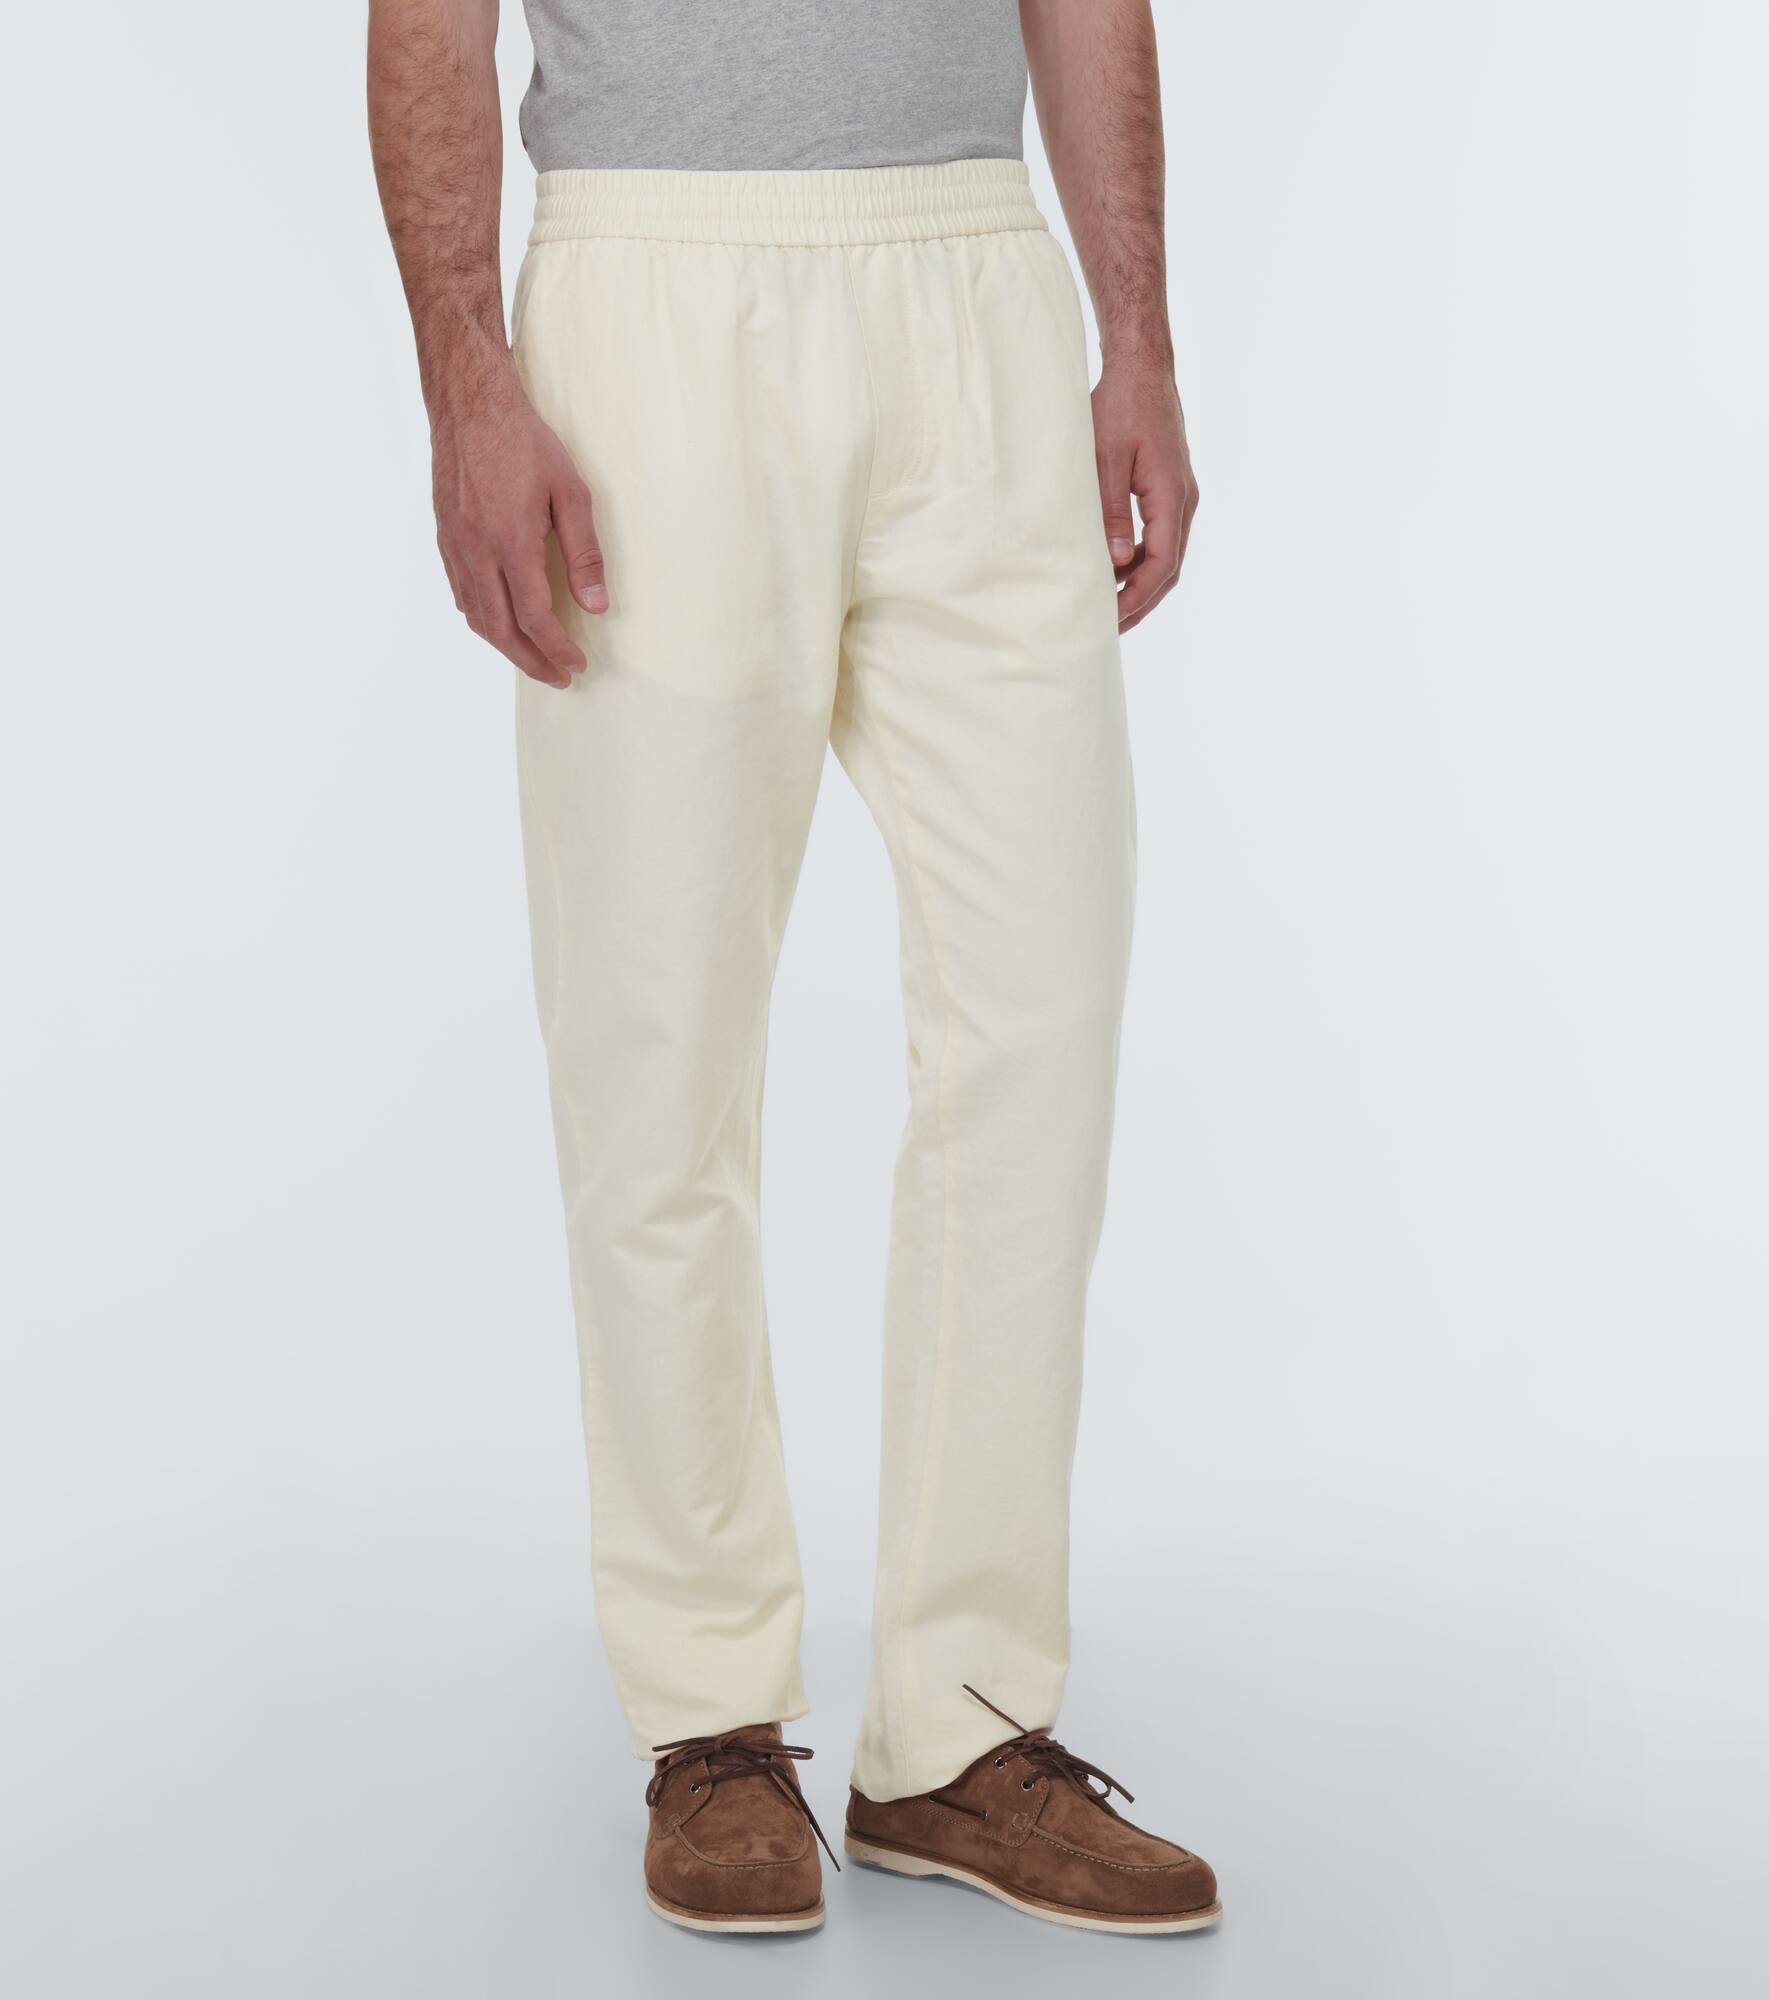 Cotton and linen pants - 3